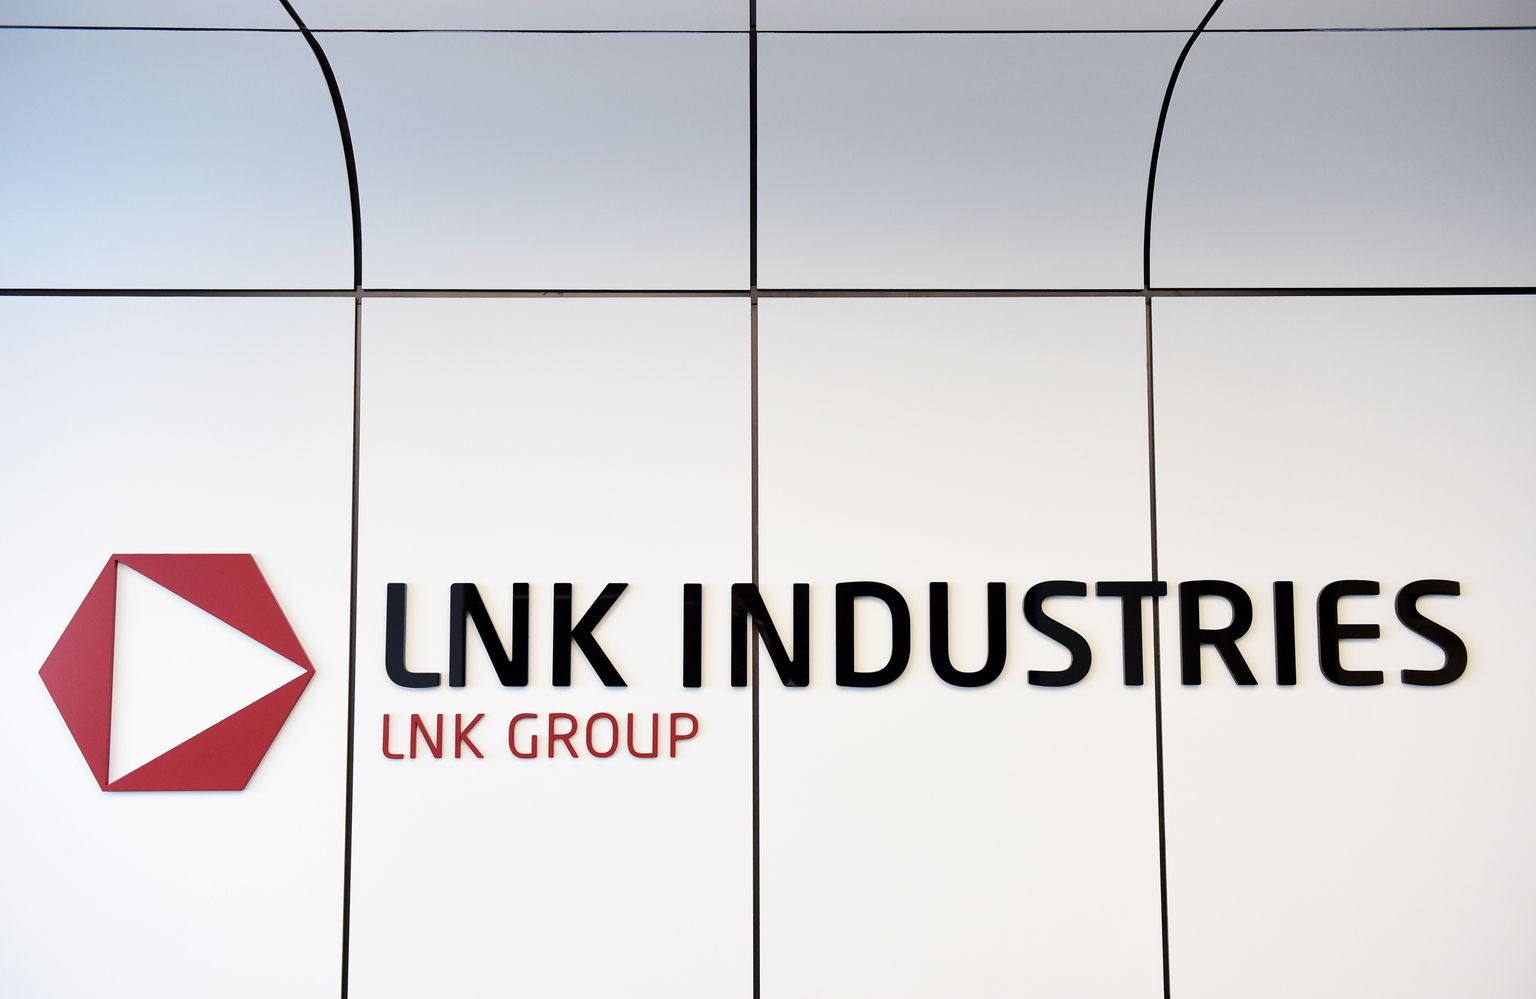 "LNK Industries" logo.